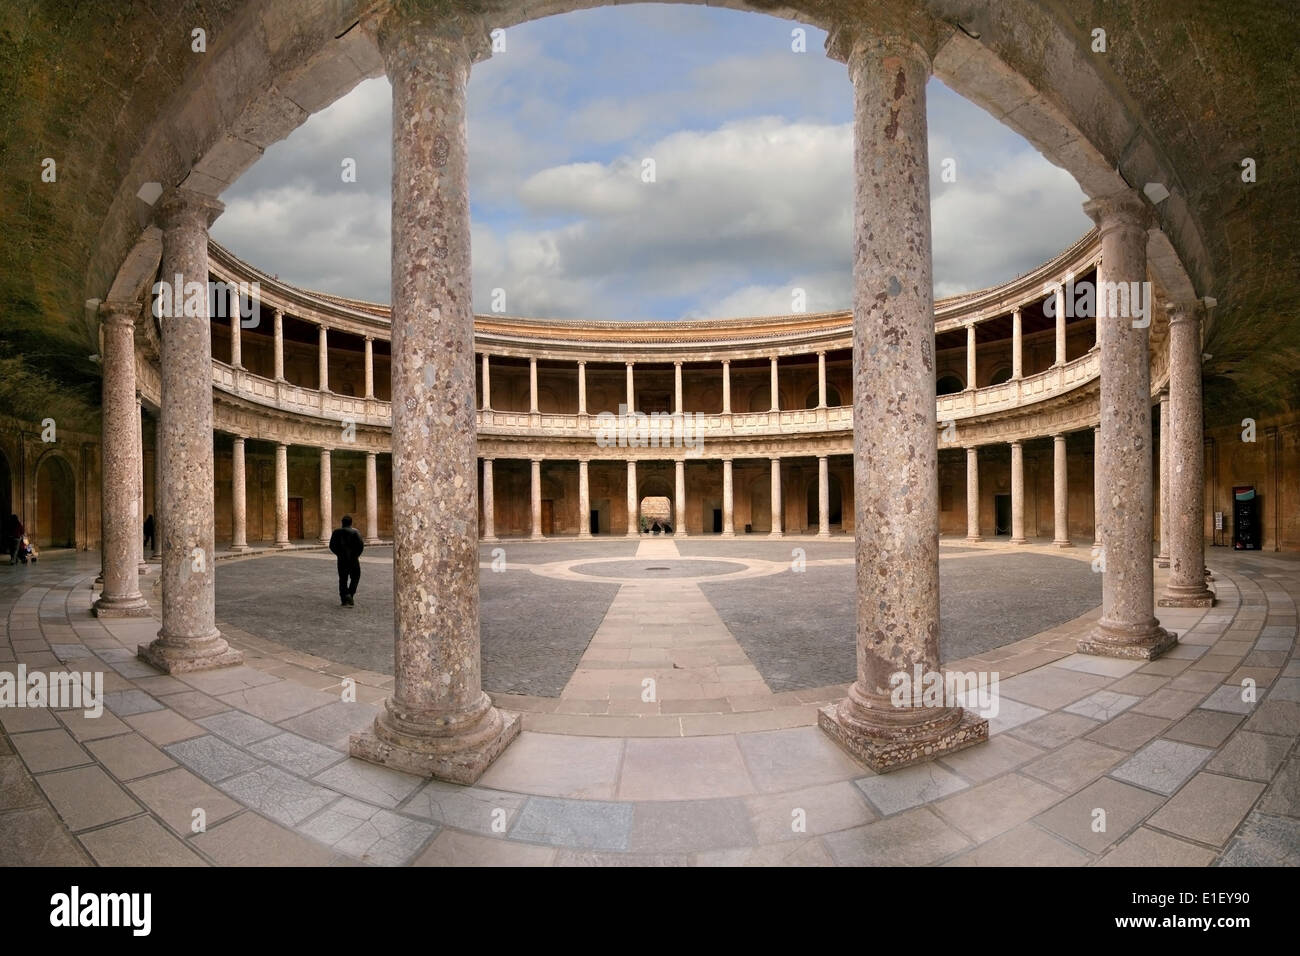 Innenhof des Palastes von Charles V (Palacio de Carlos V) in La Alhambra, Granada, Spanien. Stockfoto